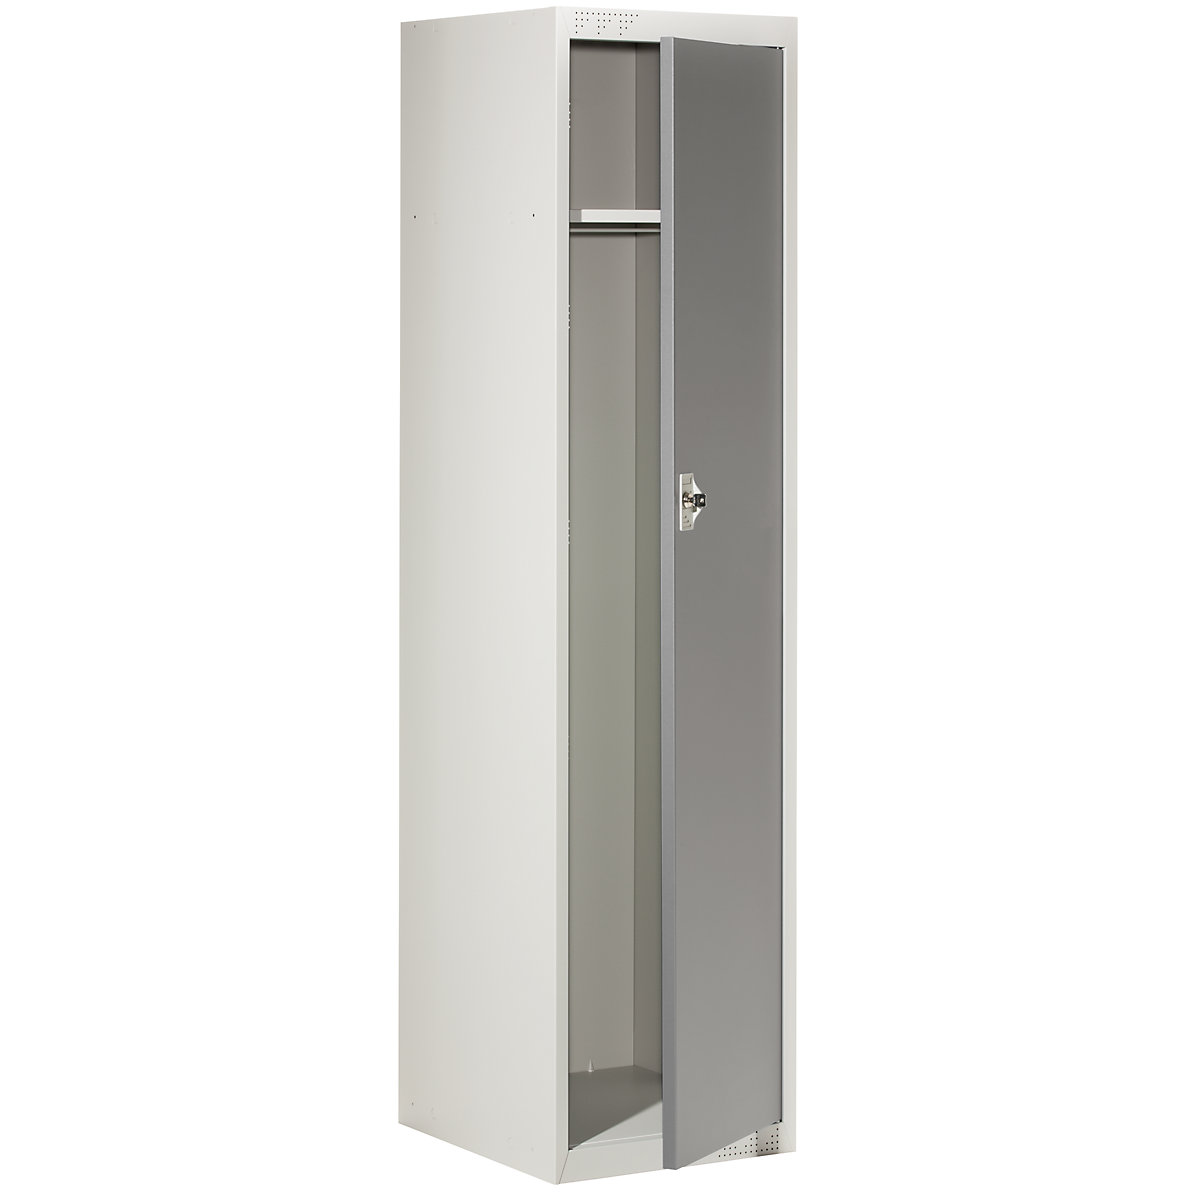 Cloakroom locker system – eurokraft basic, with standard and extension modules, HxWxD 1800 x 450 x 500 mm, 1 hat shelf, 1 clothes rail, light grey / basalt grey, standard unit-6